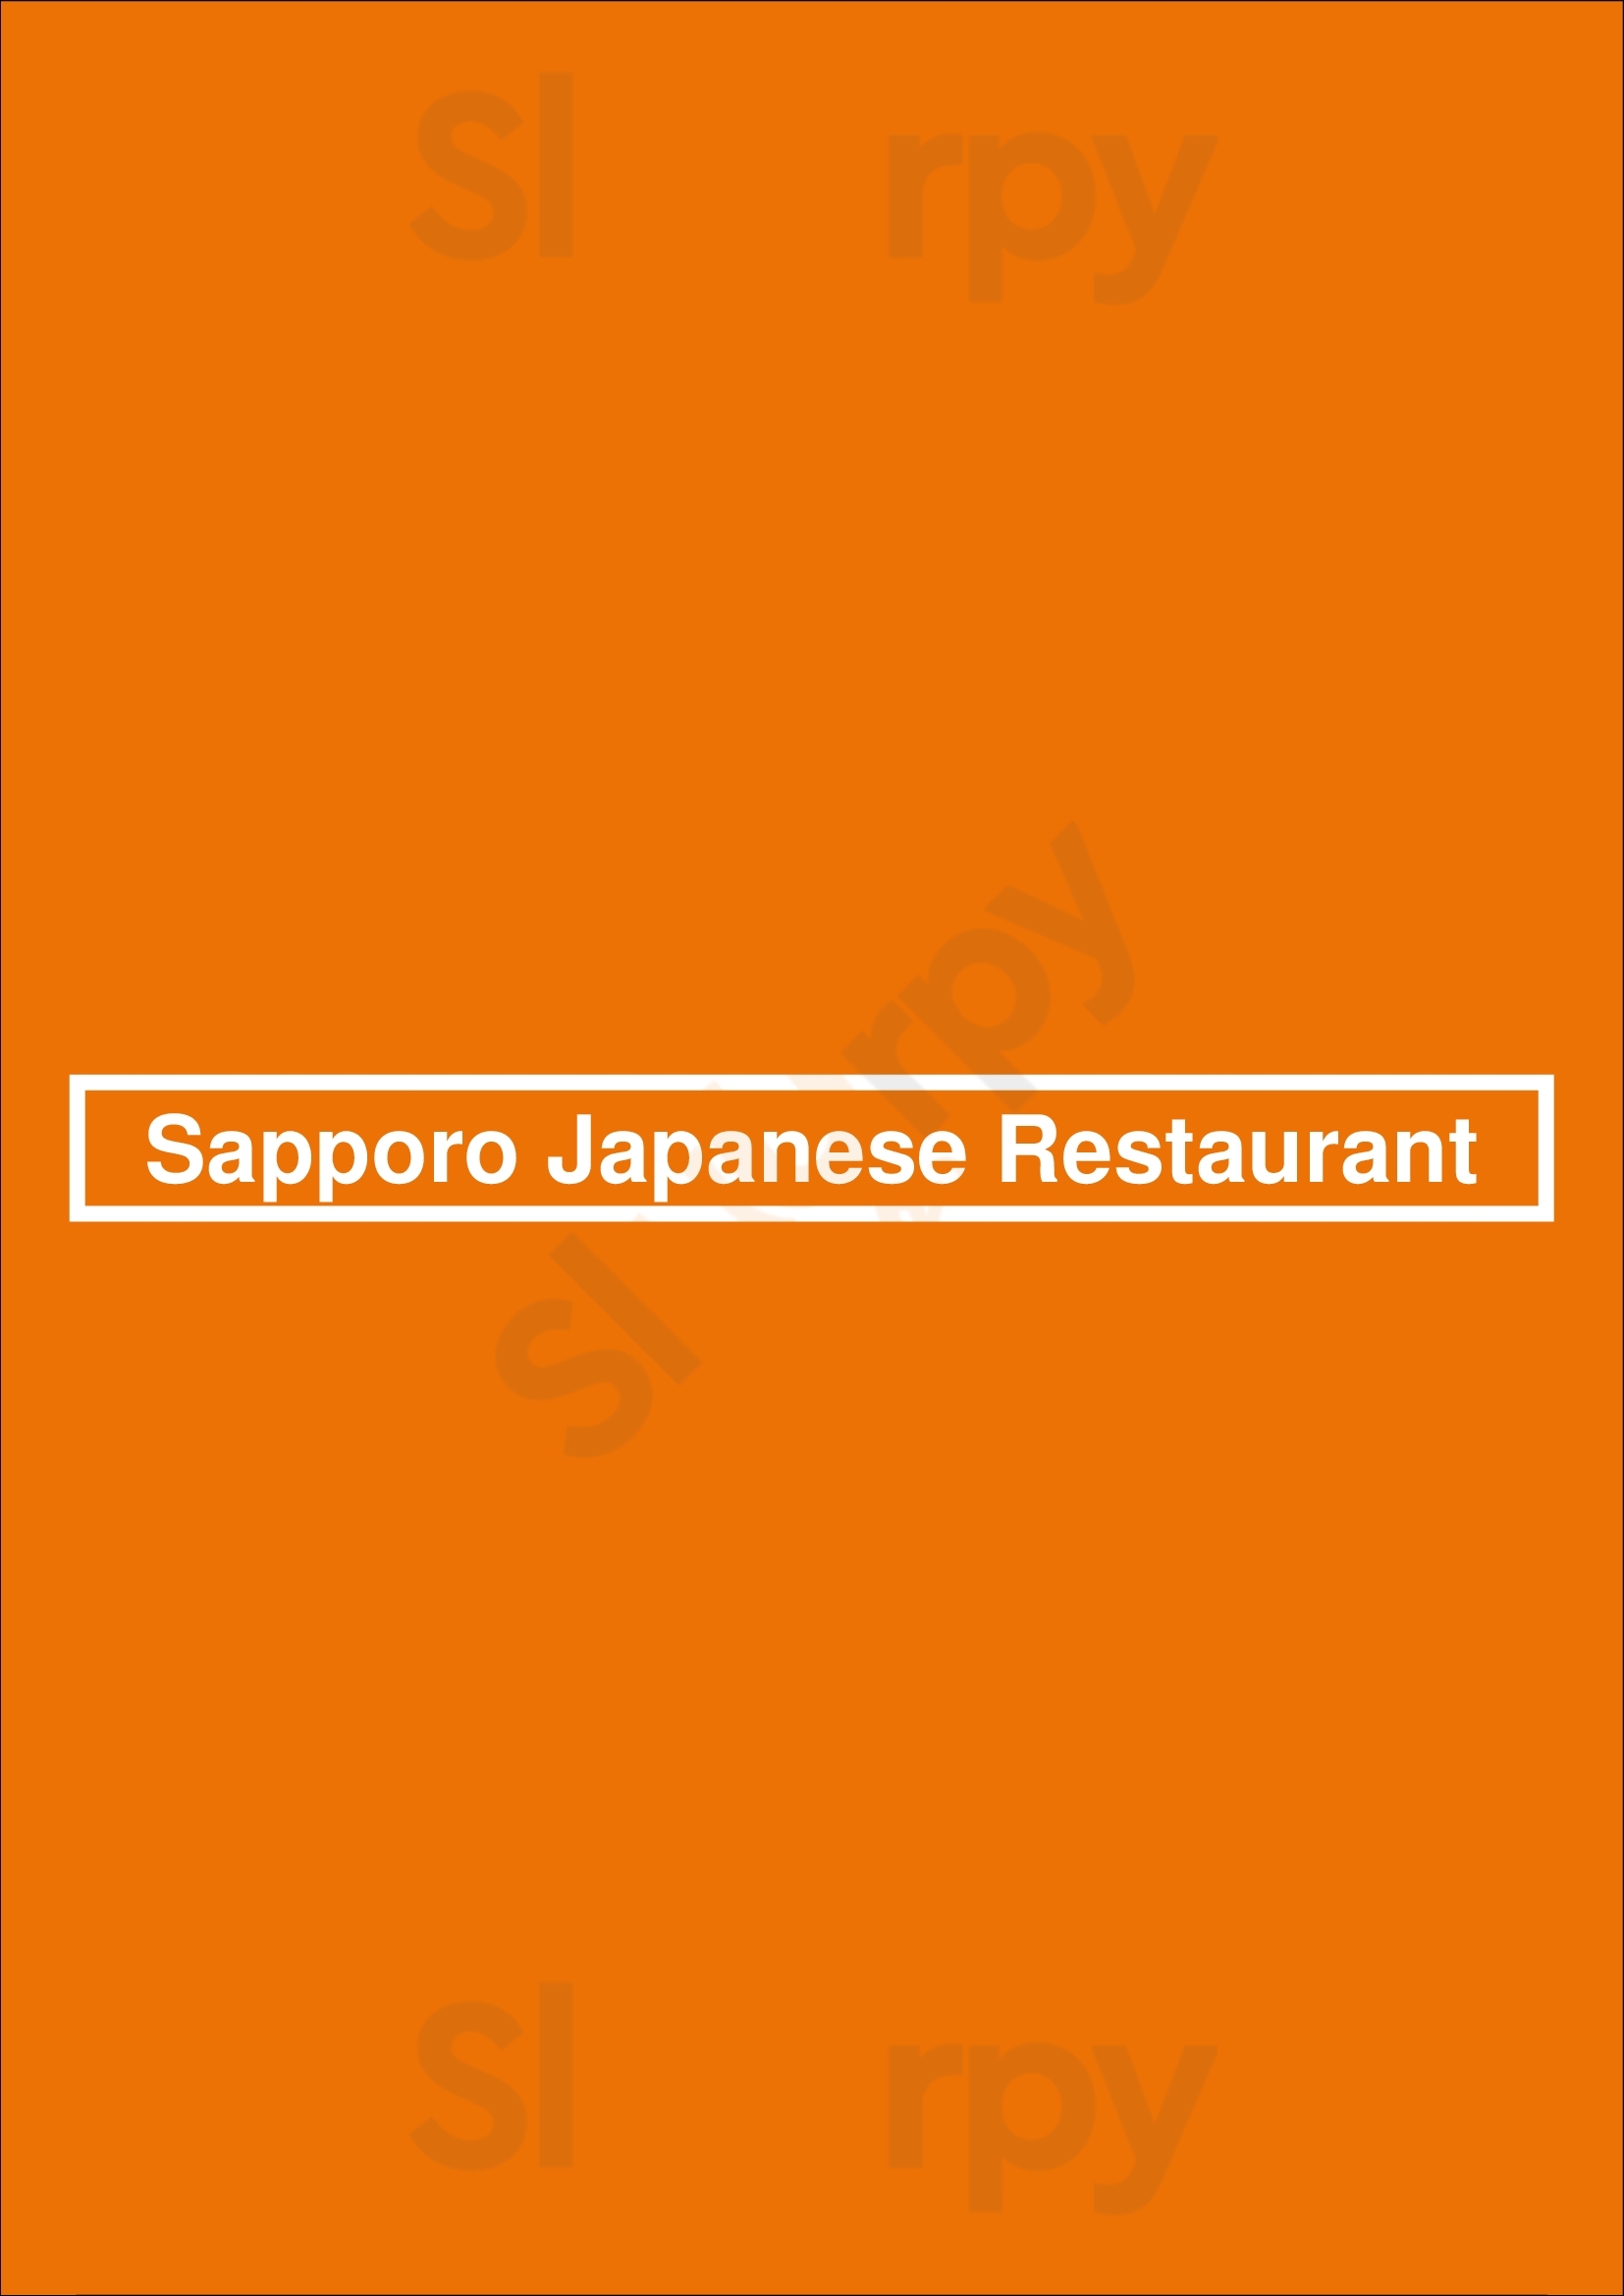 Sapporo Japanese Restaurant Hamilton Menu - 1